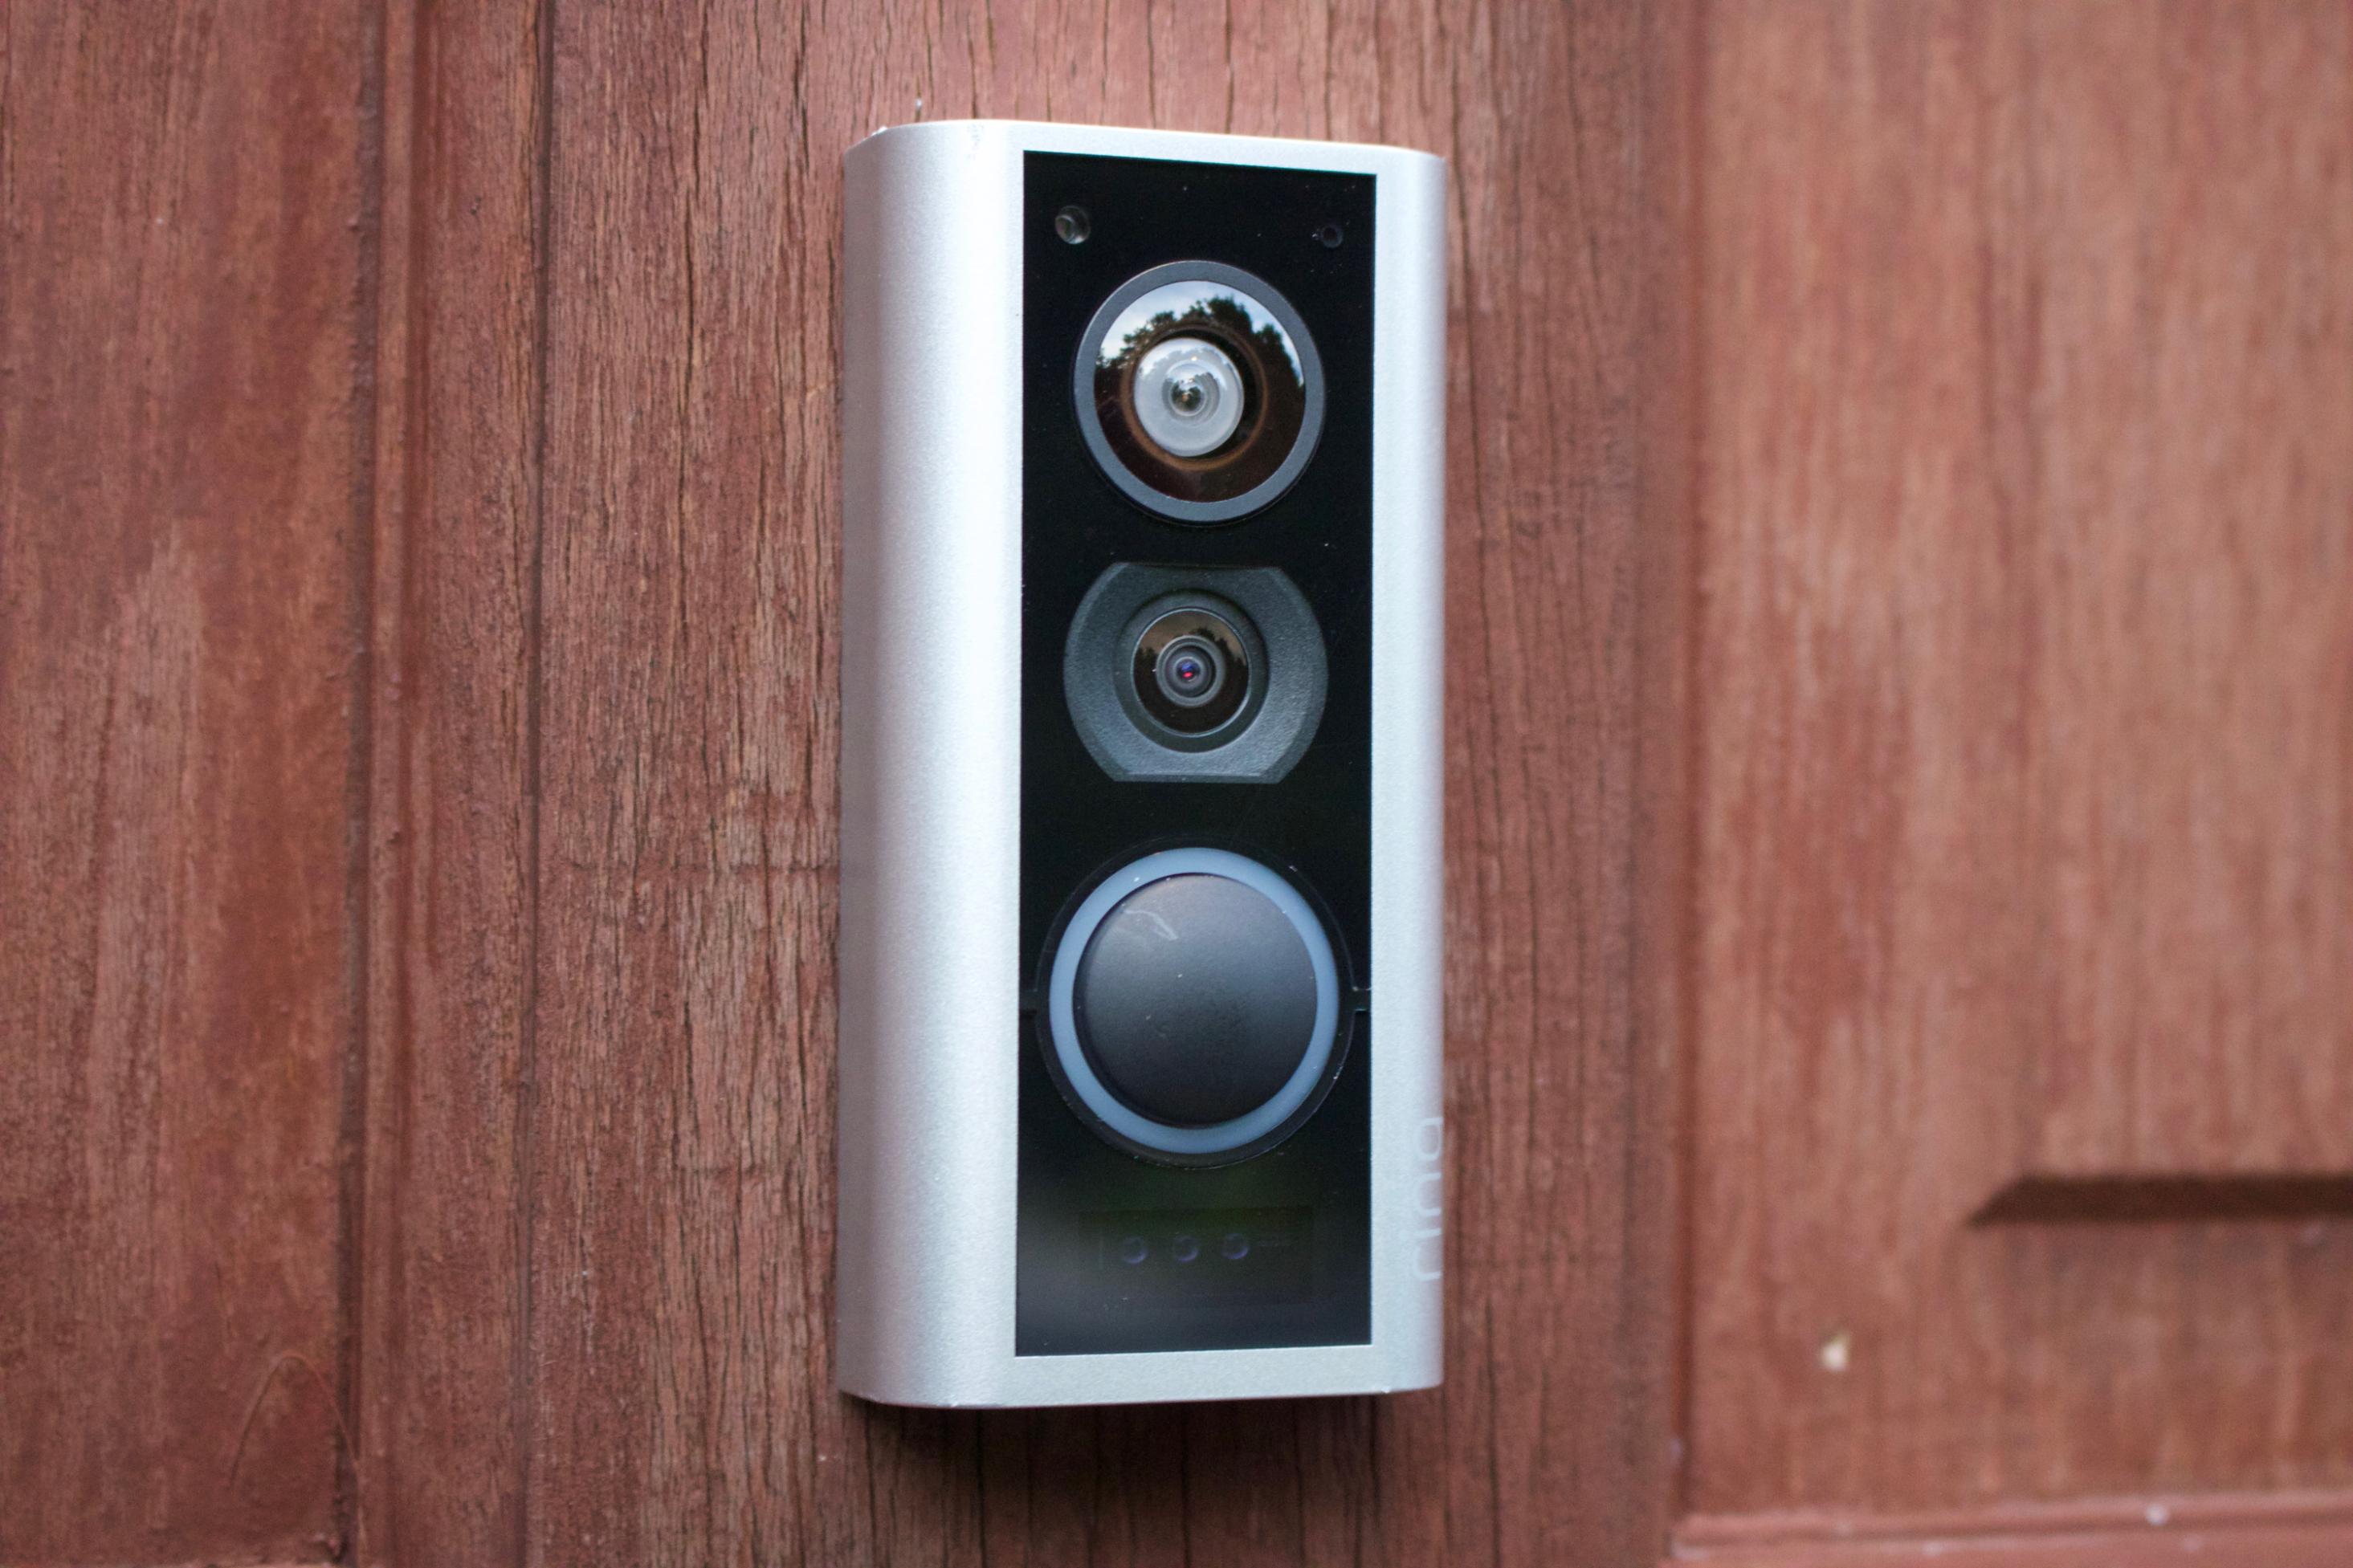 ring doorbell pro smartthings